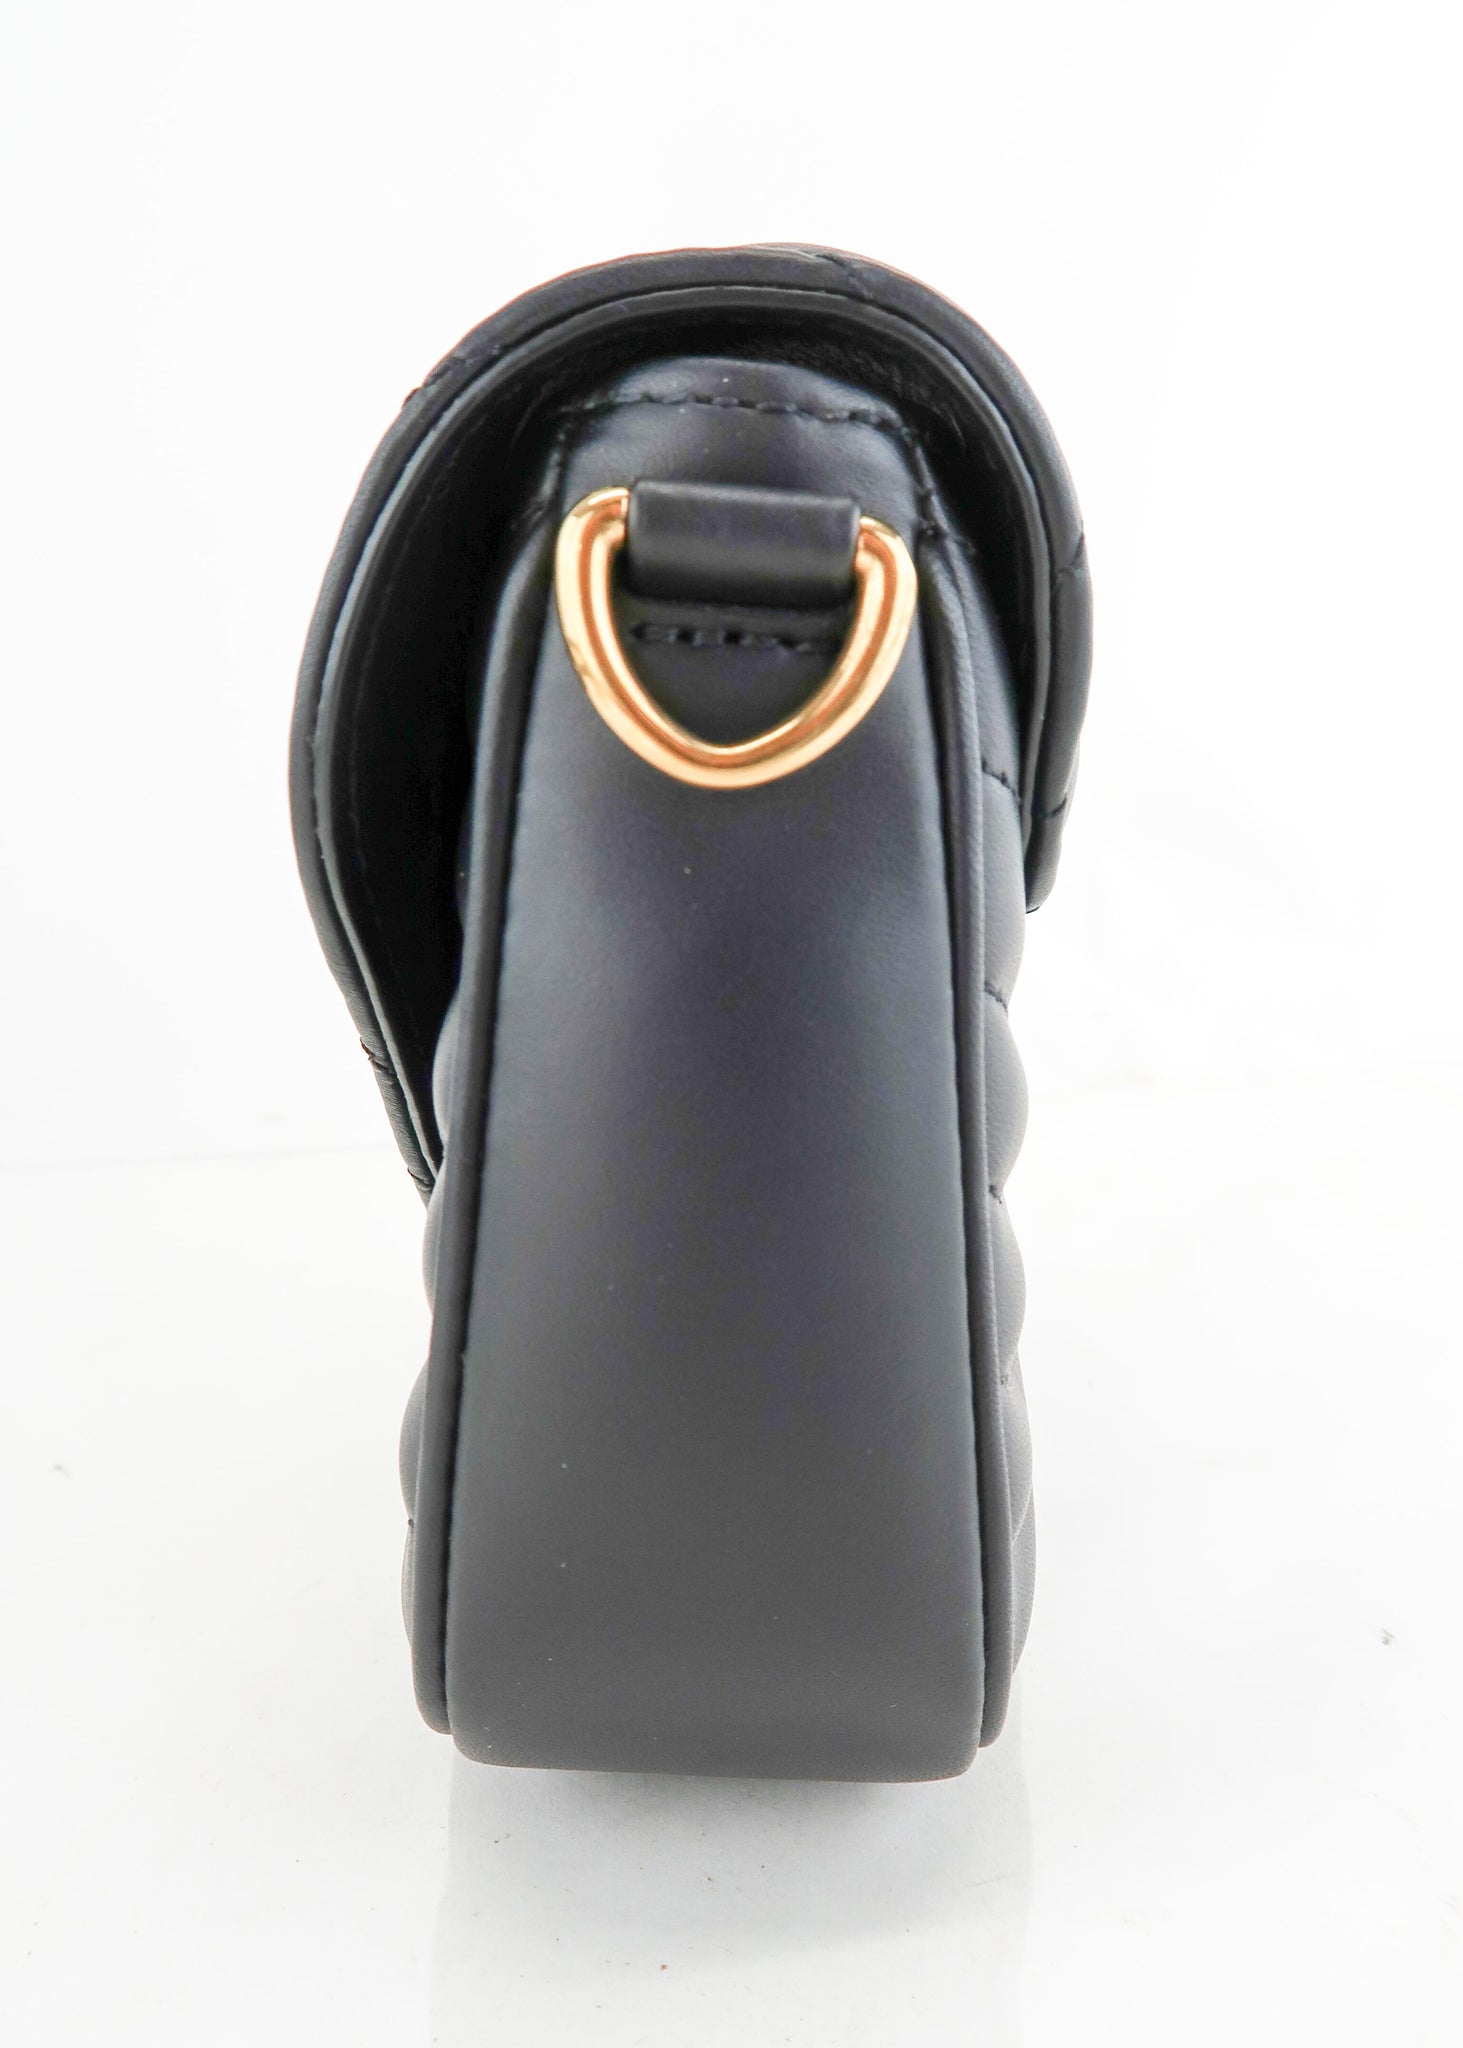 Louis Vuitton New Wave multi-pochette 2295.00 ❌sold❌ #louisvuitton  #louisvuittionbag